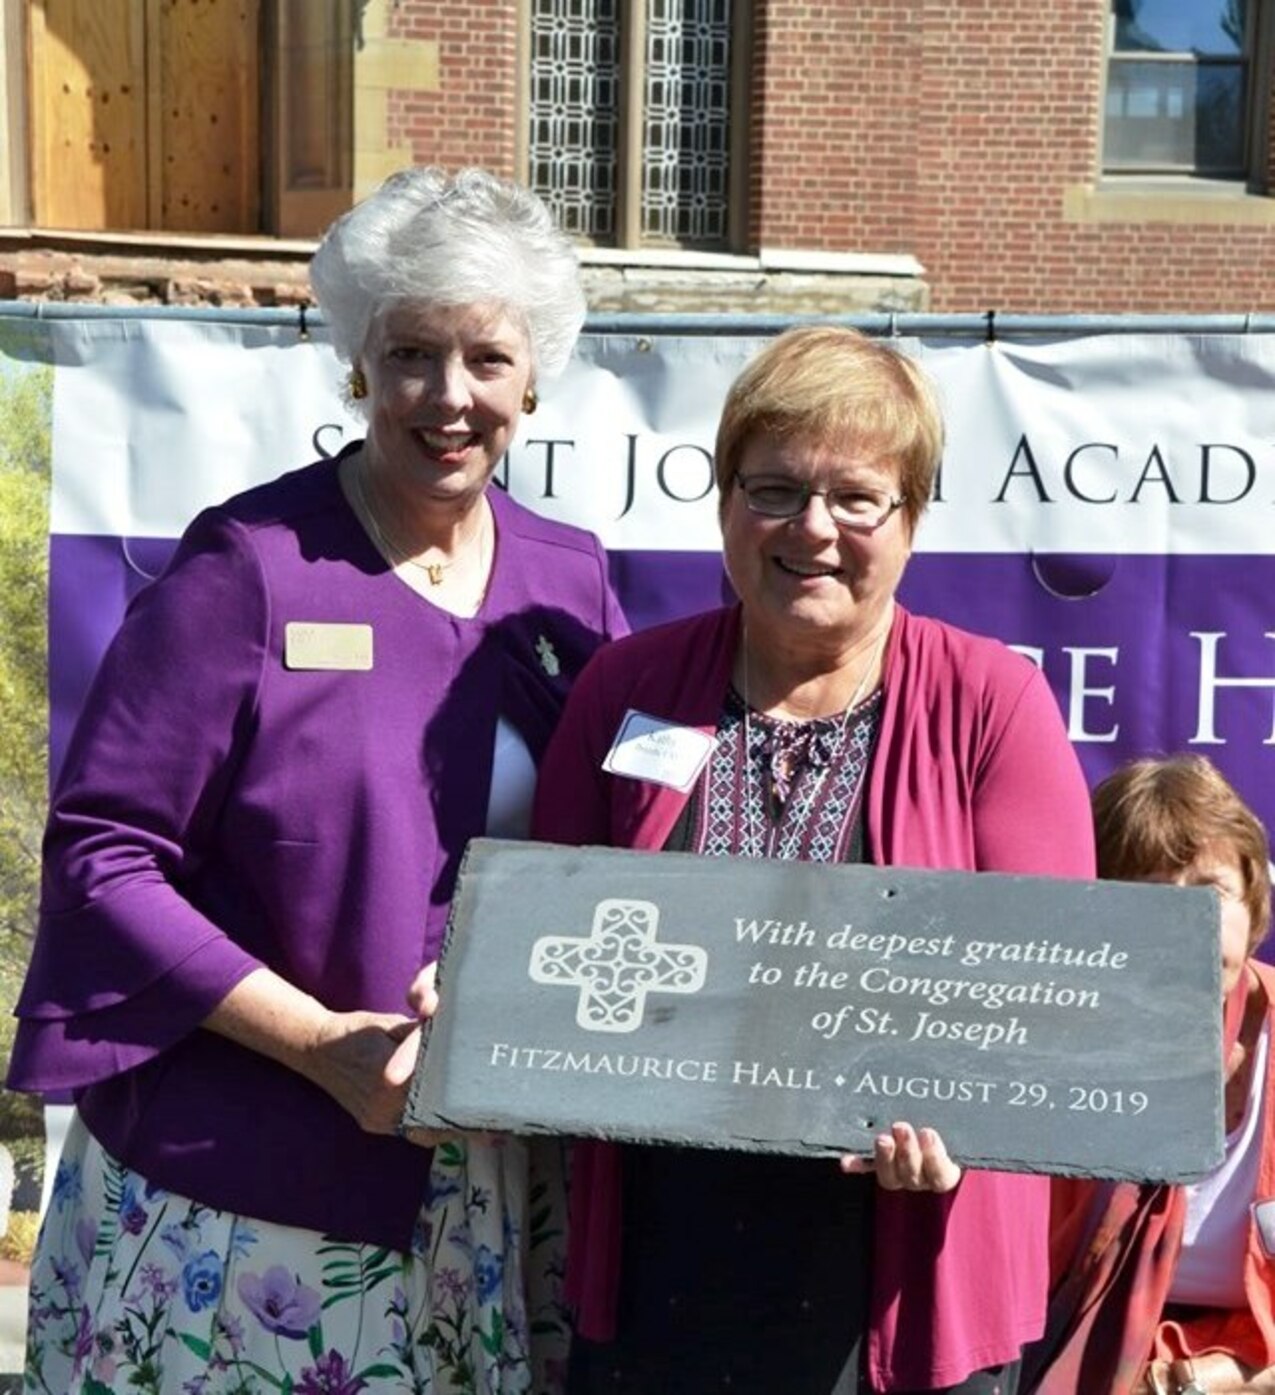 Saint Joseph Academy celebrates beginning of Fitzmaurice Hall renovation